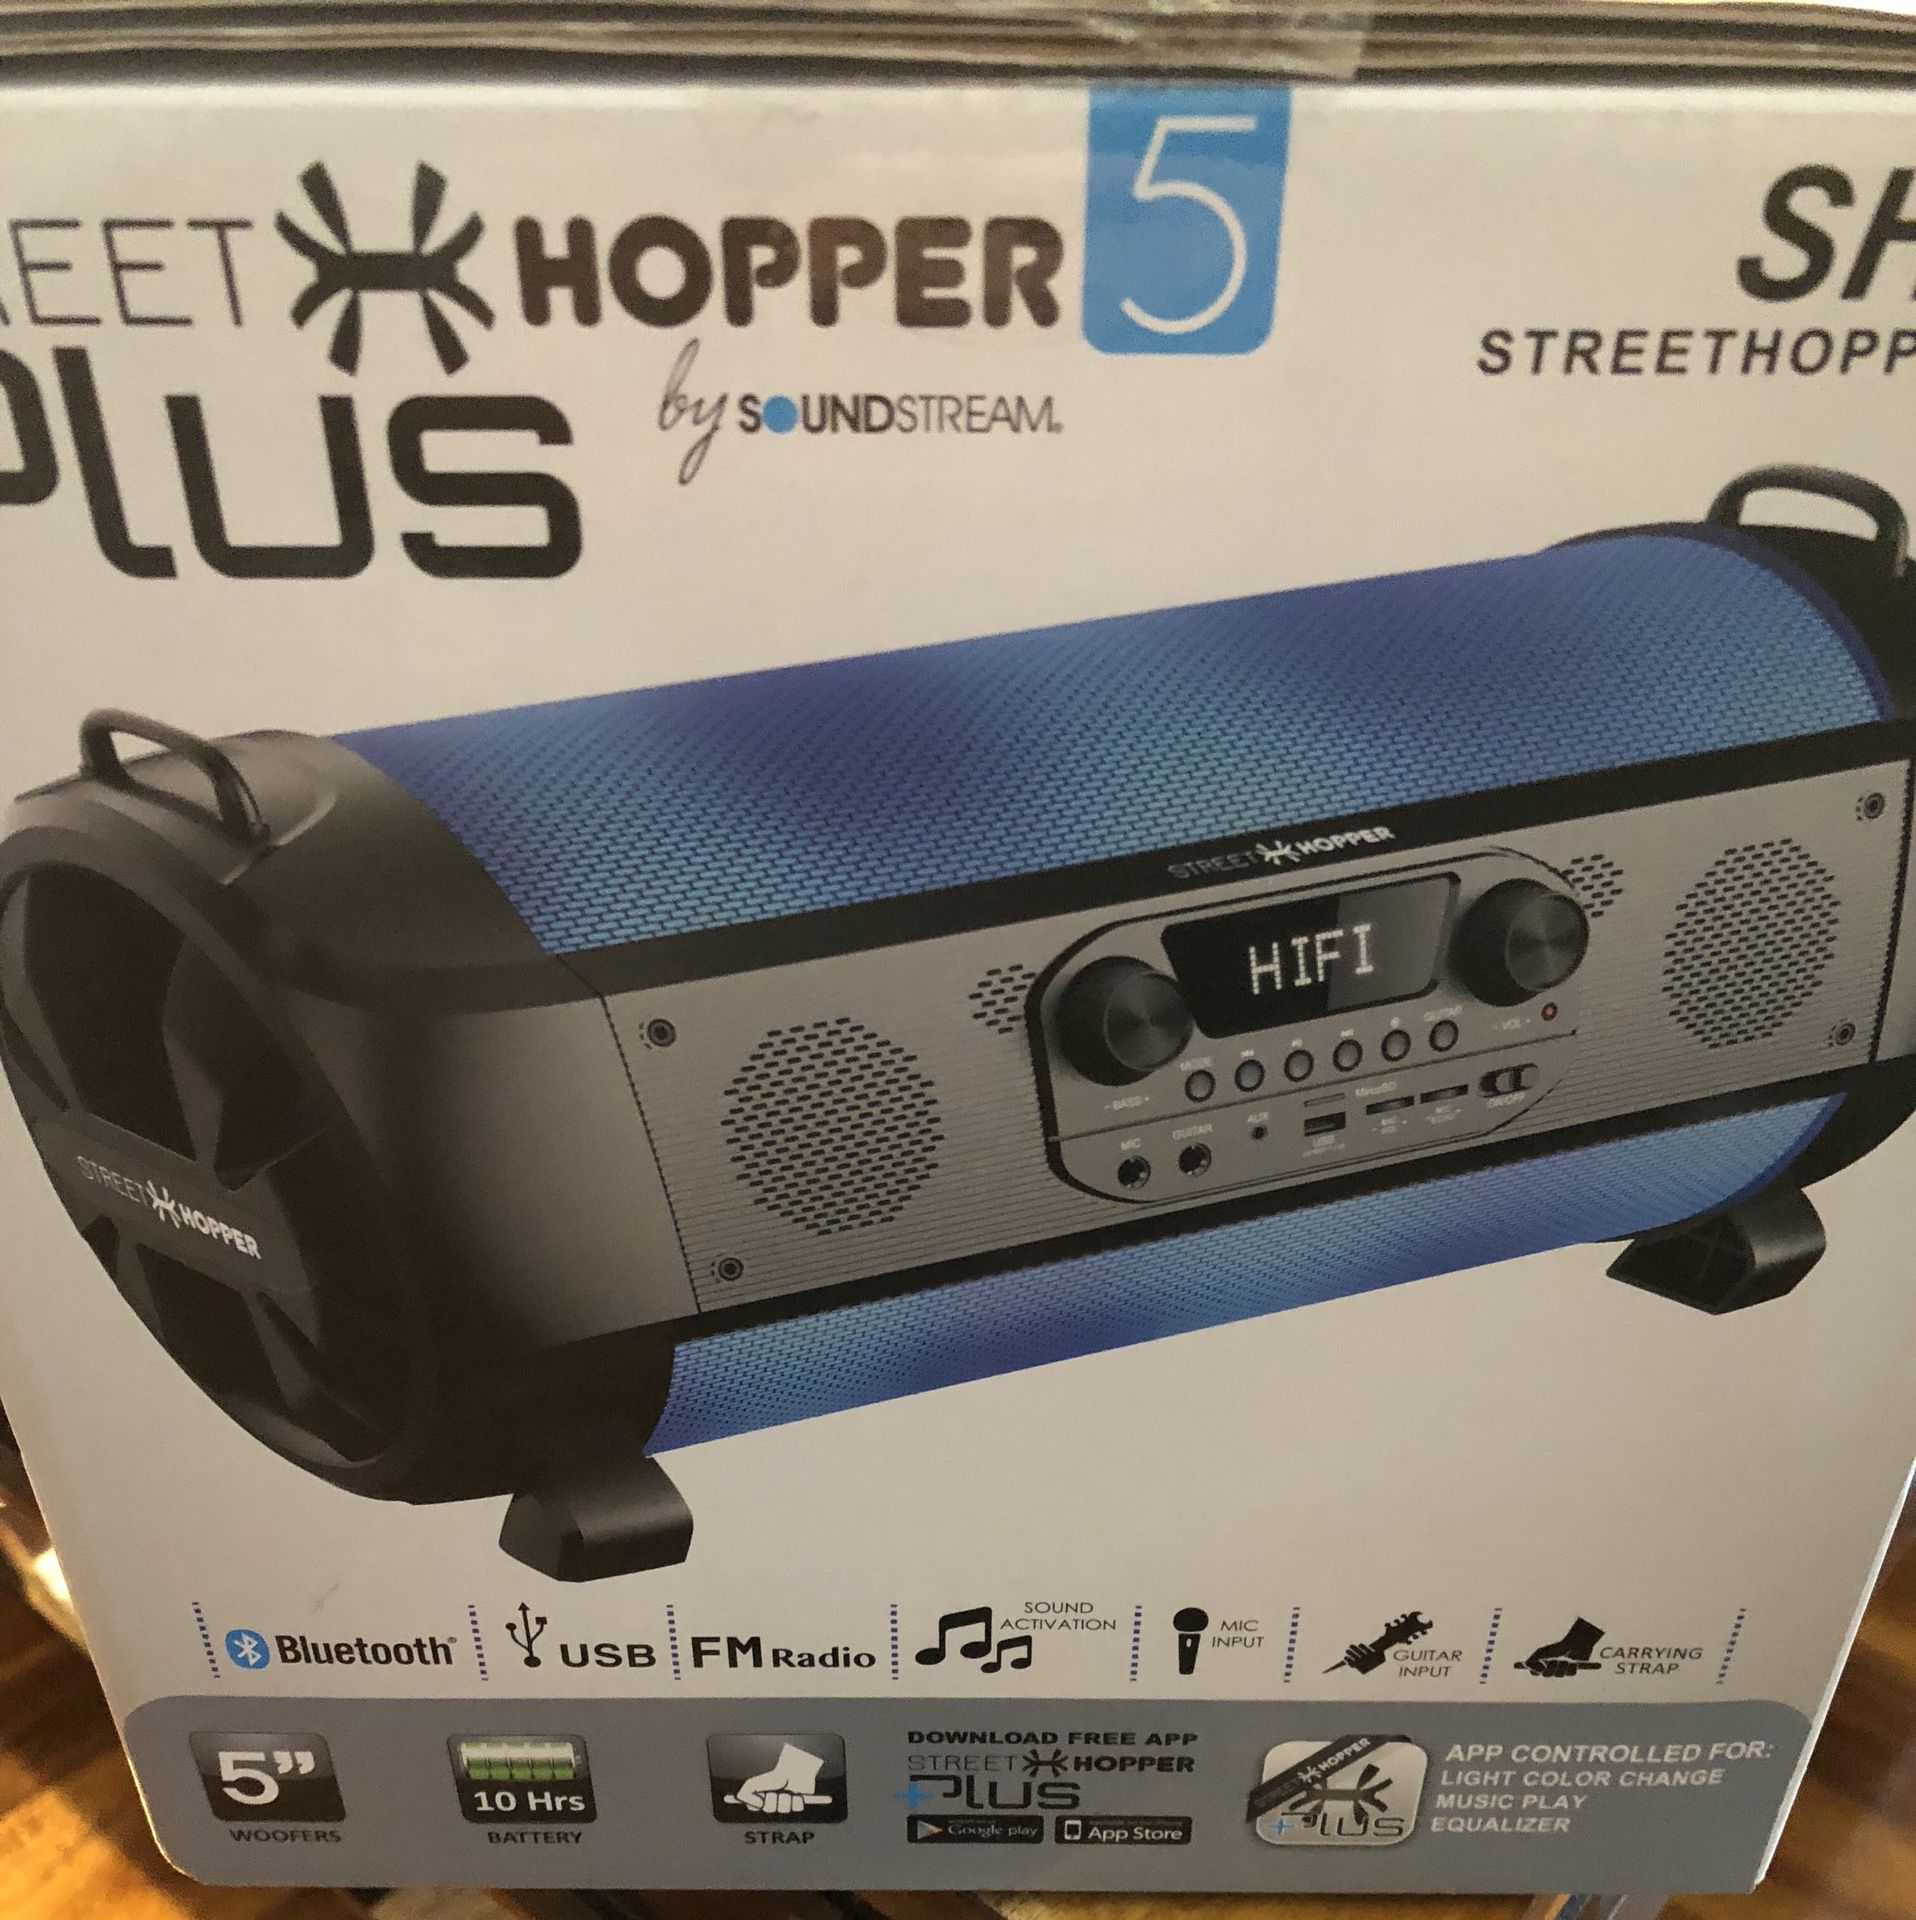 SoundStream Street Hopper 5 Plus portable Bluetooth Speaker